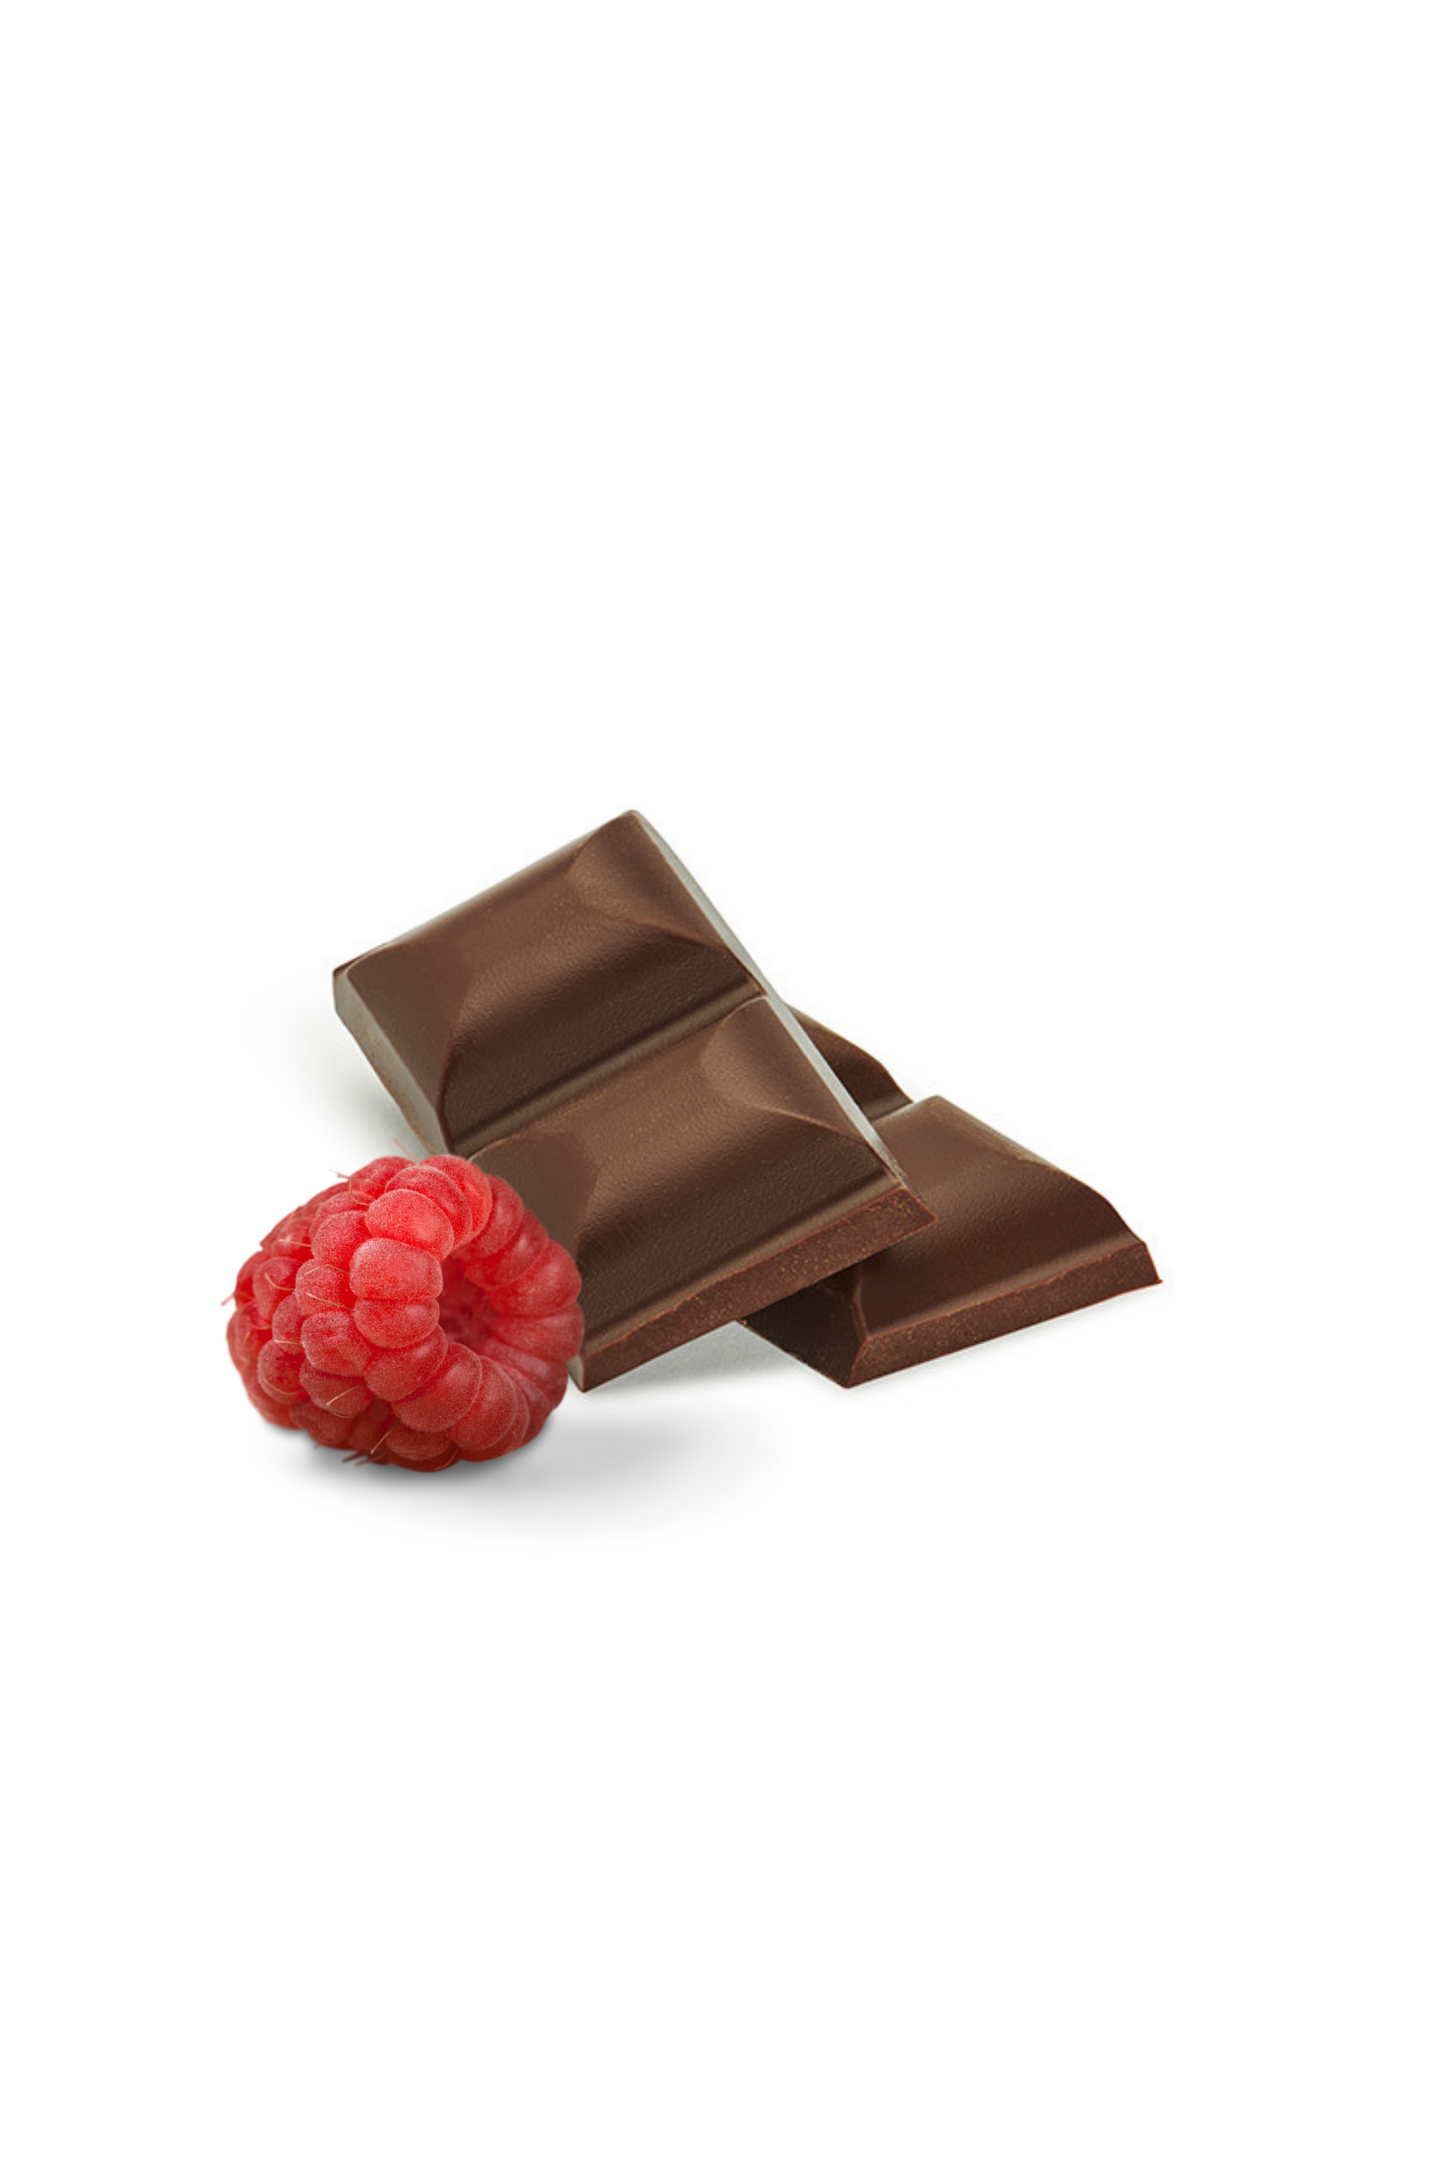 Dark Chocolate with Raspberries, no Added Sugar. 65% Cocoa. Vegan